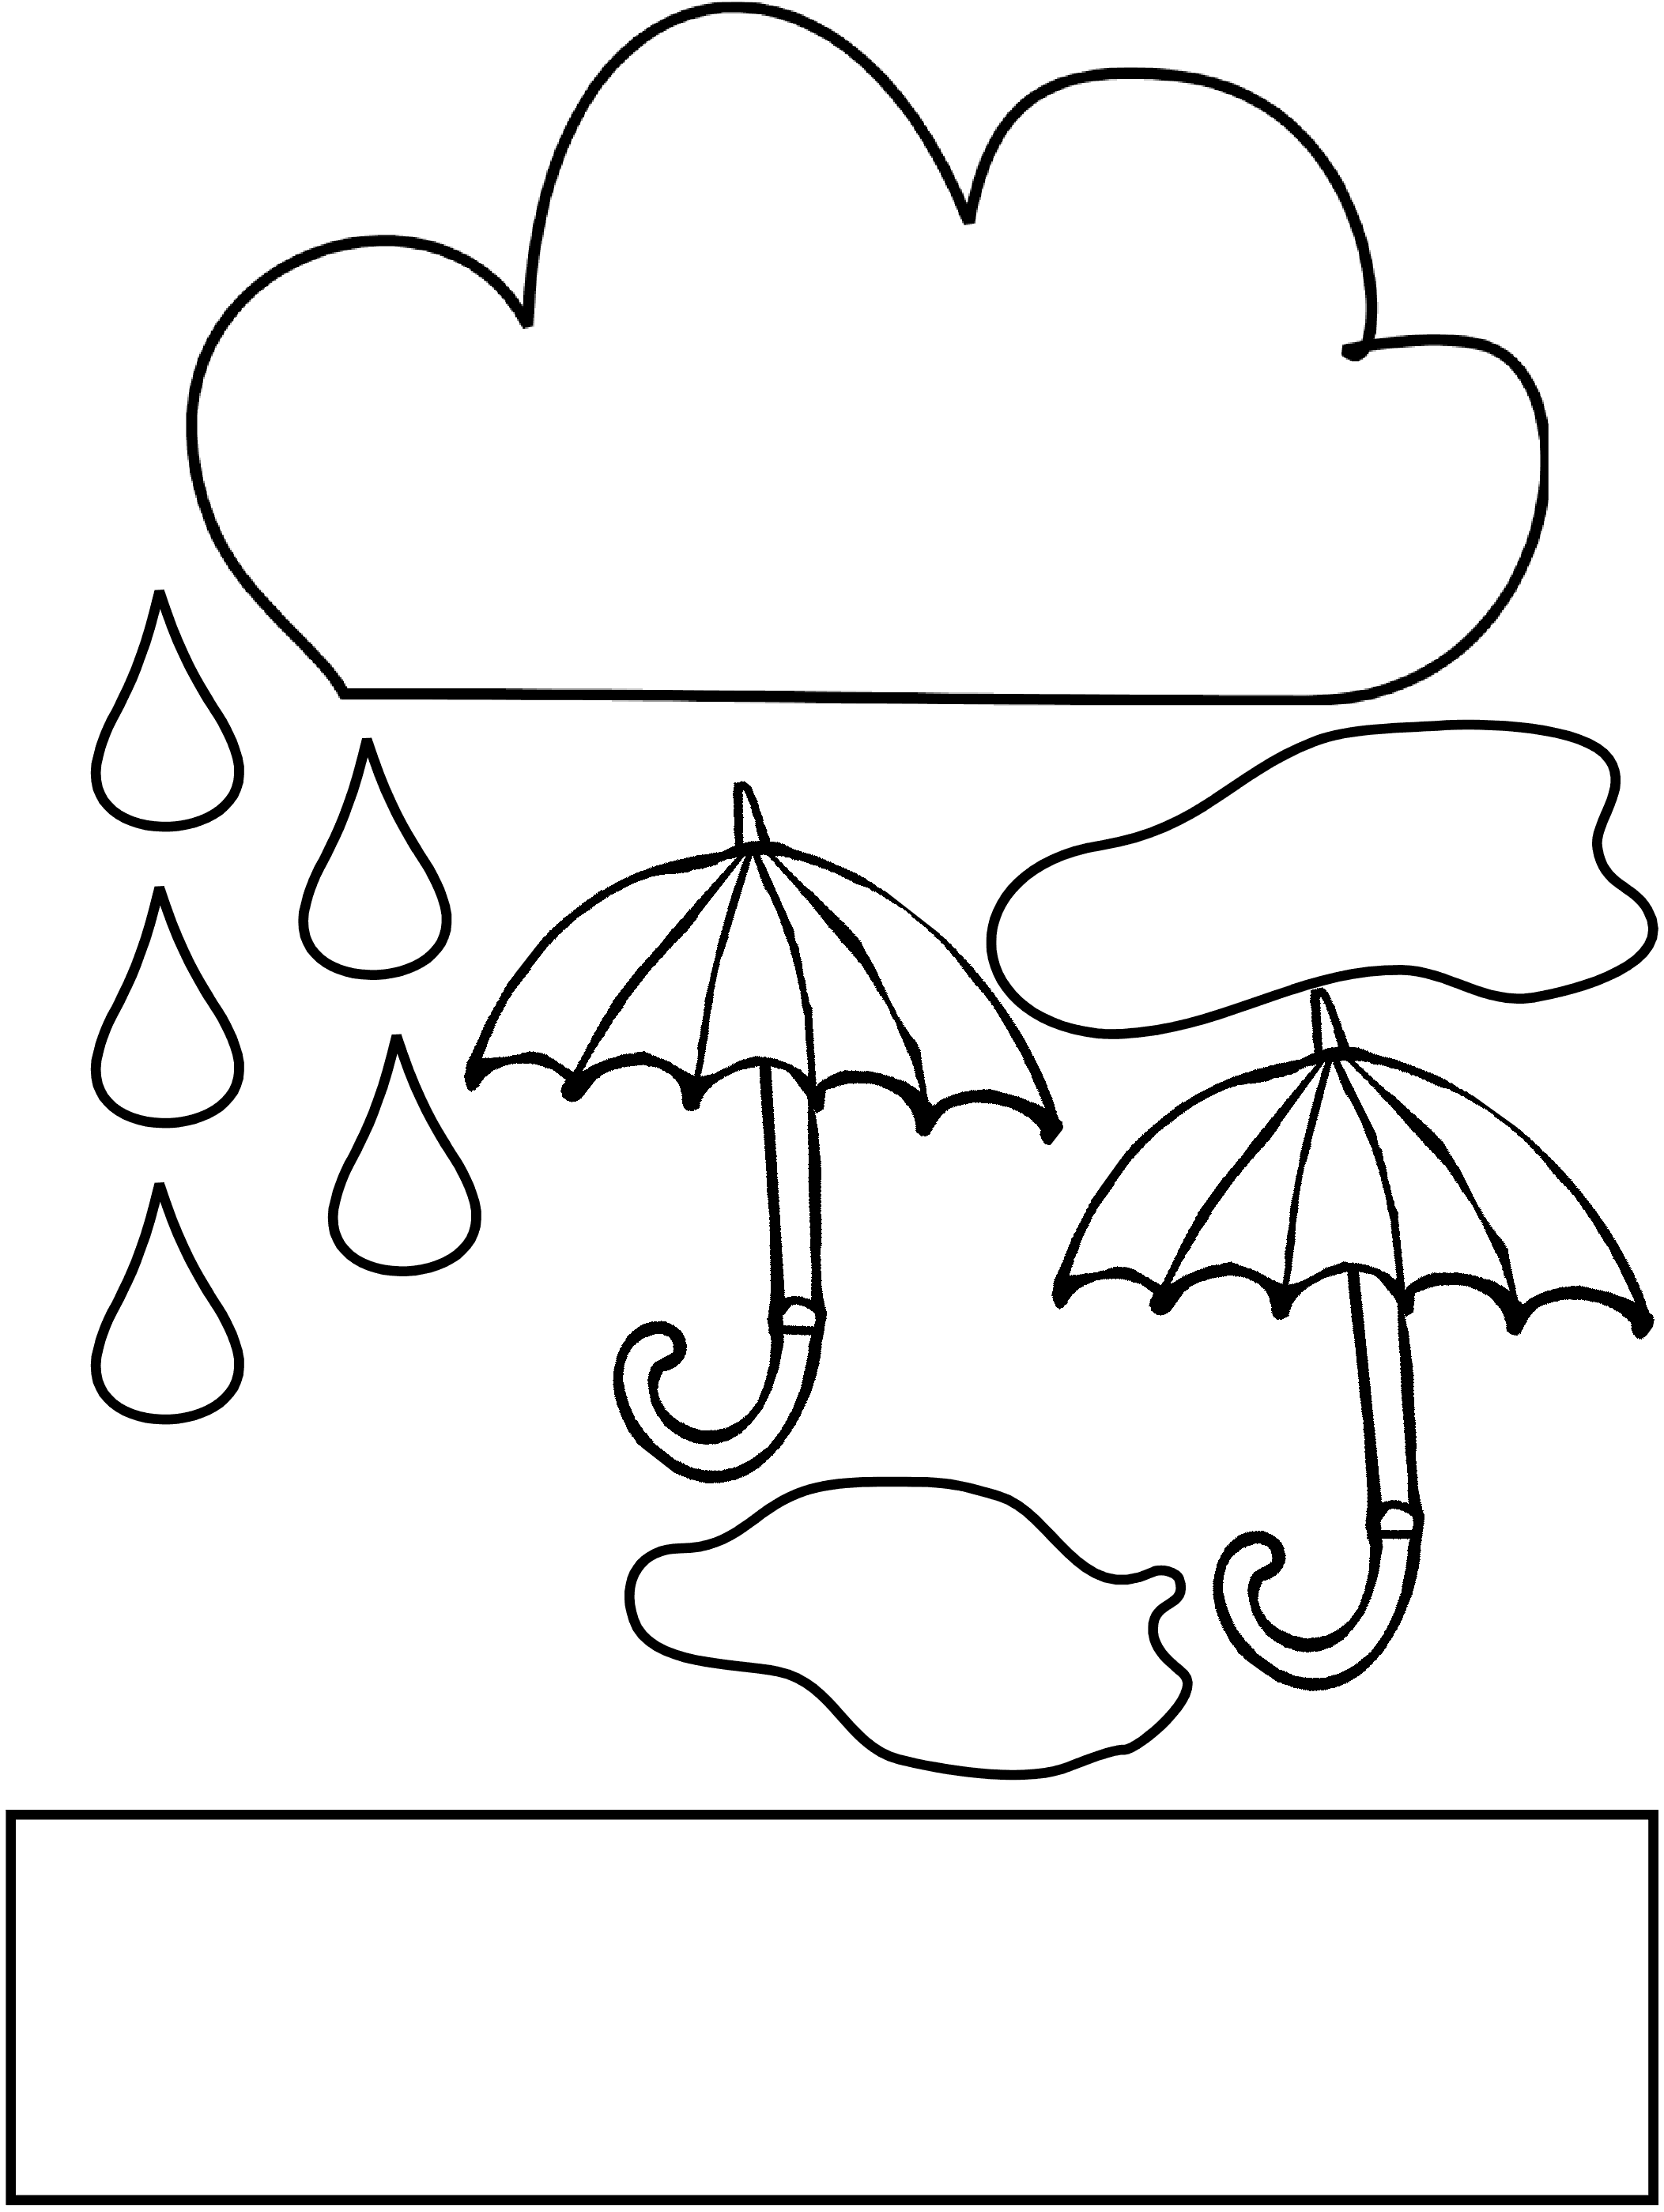 Coloring Page - Printable Raindrops - Clip Art Library